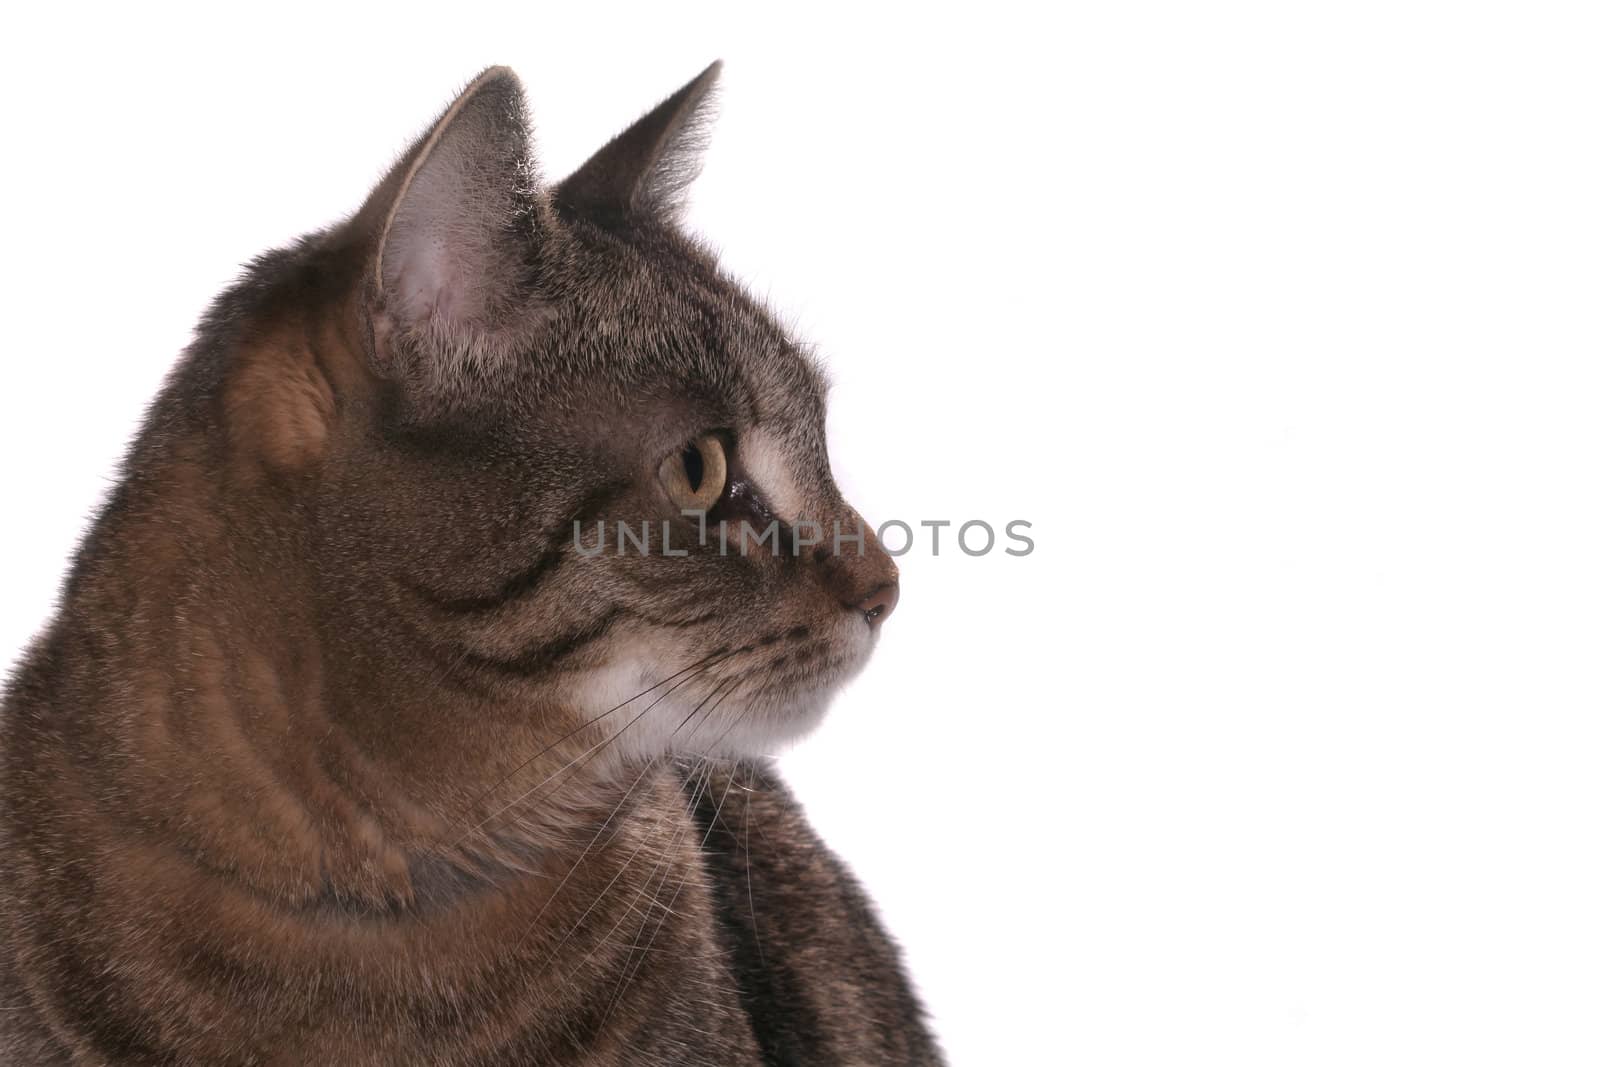 cat portrait by silencefoto